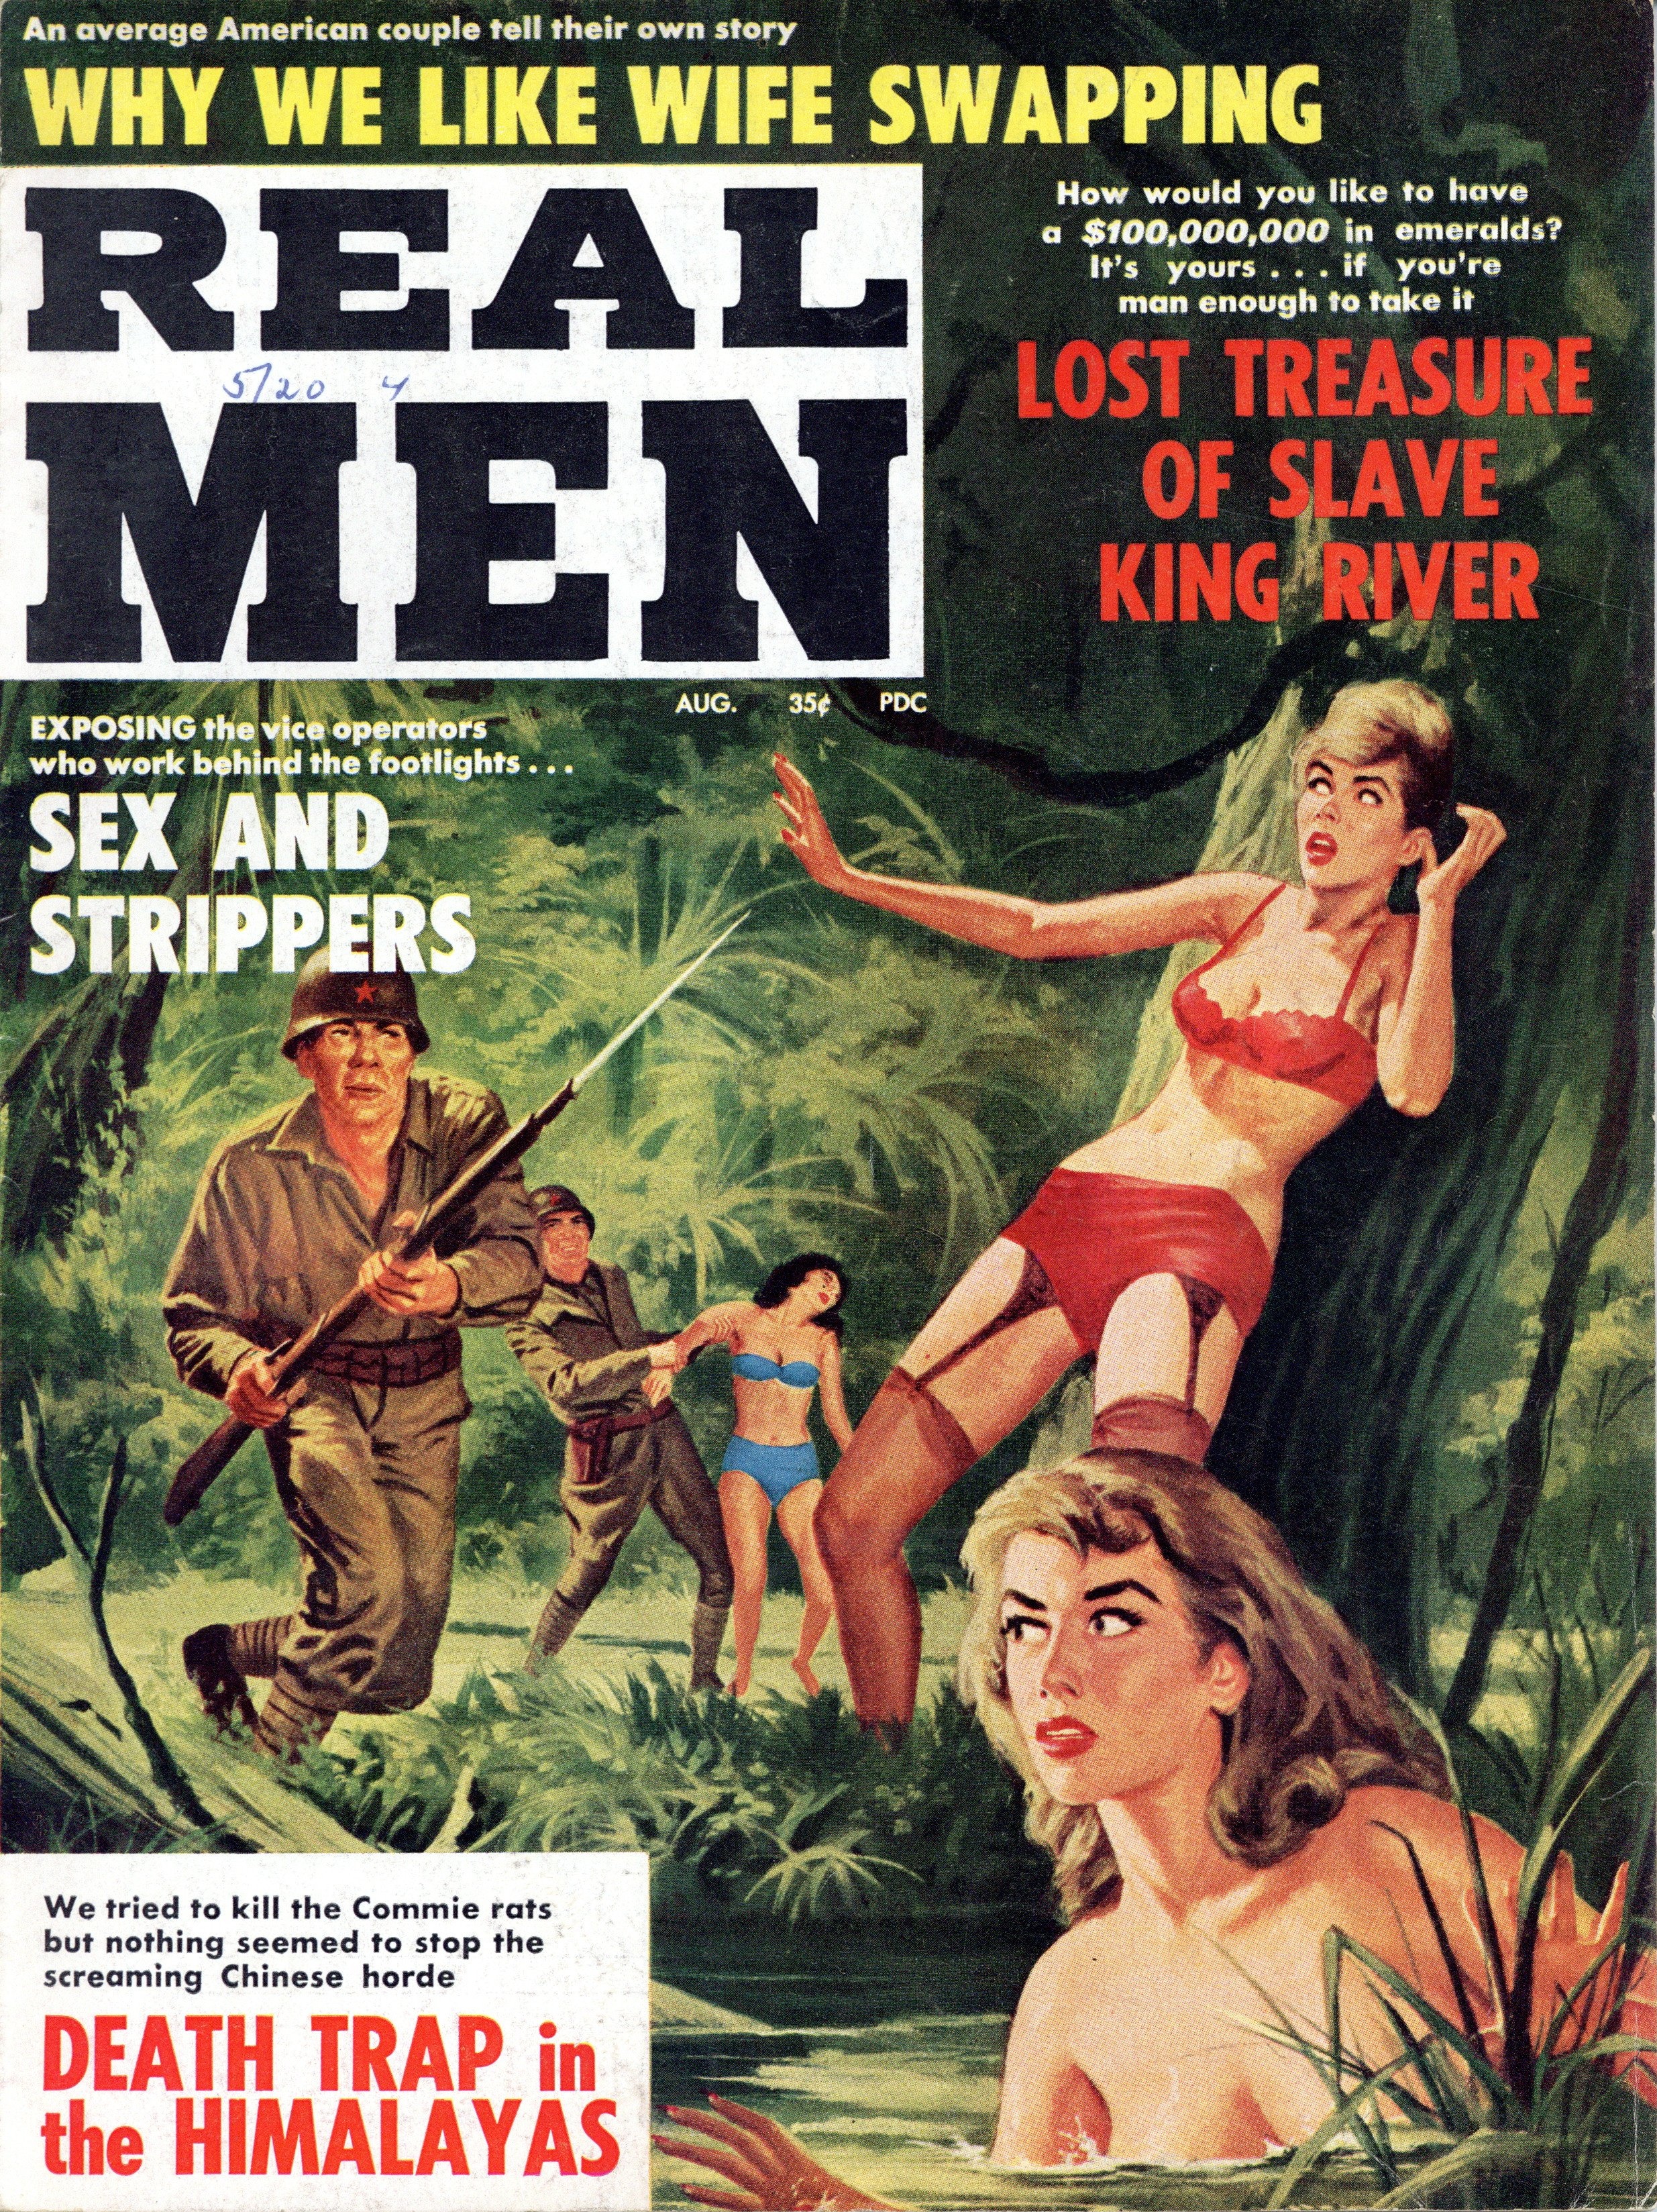 Real Wives vol 2 no 1 men's magazine: Jizbang Kumsplatter